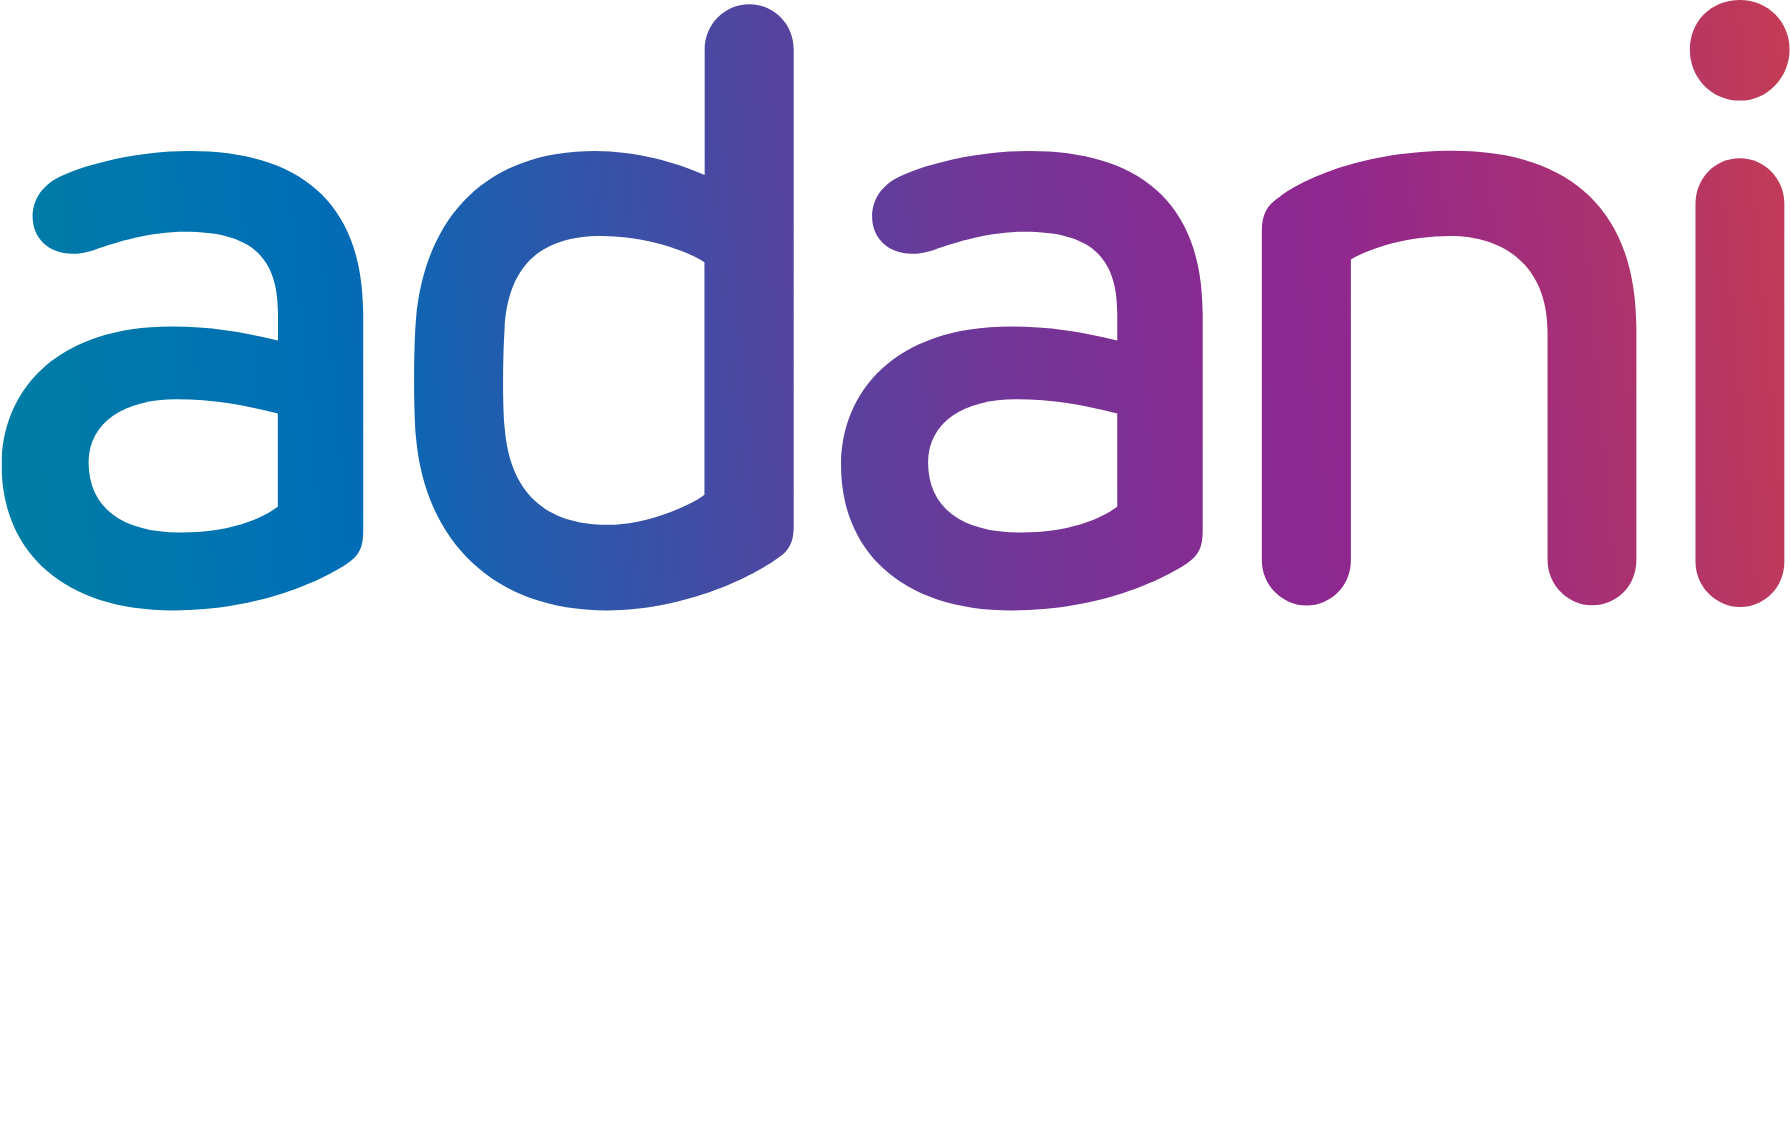 Adani Power logo large for dark backgrounds (transparent PNG)